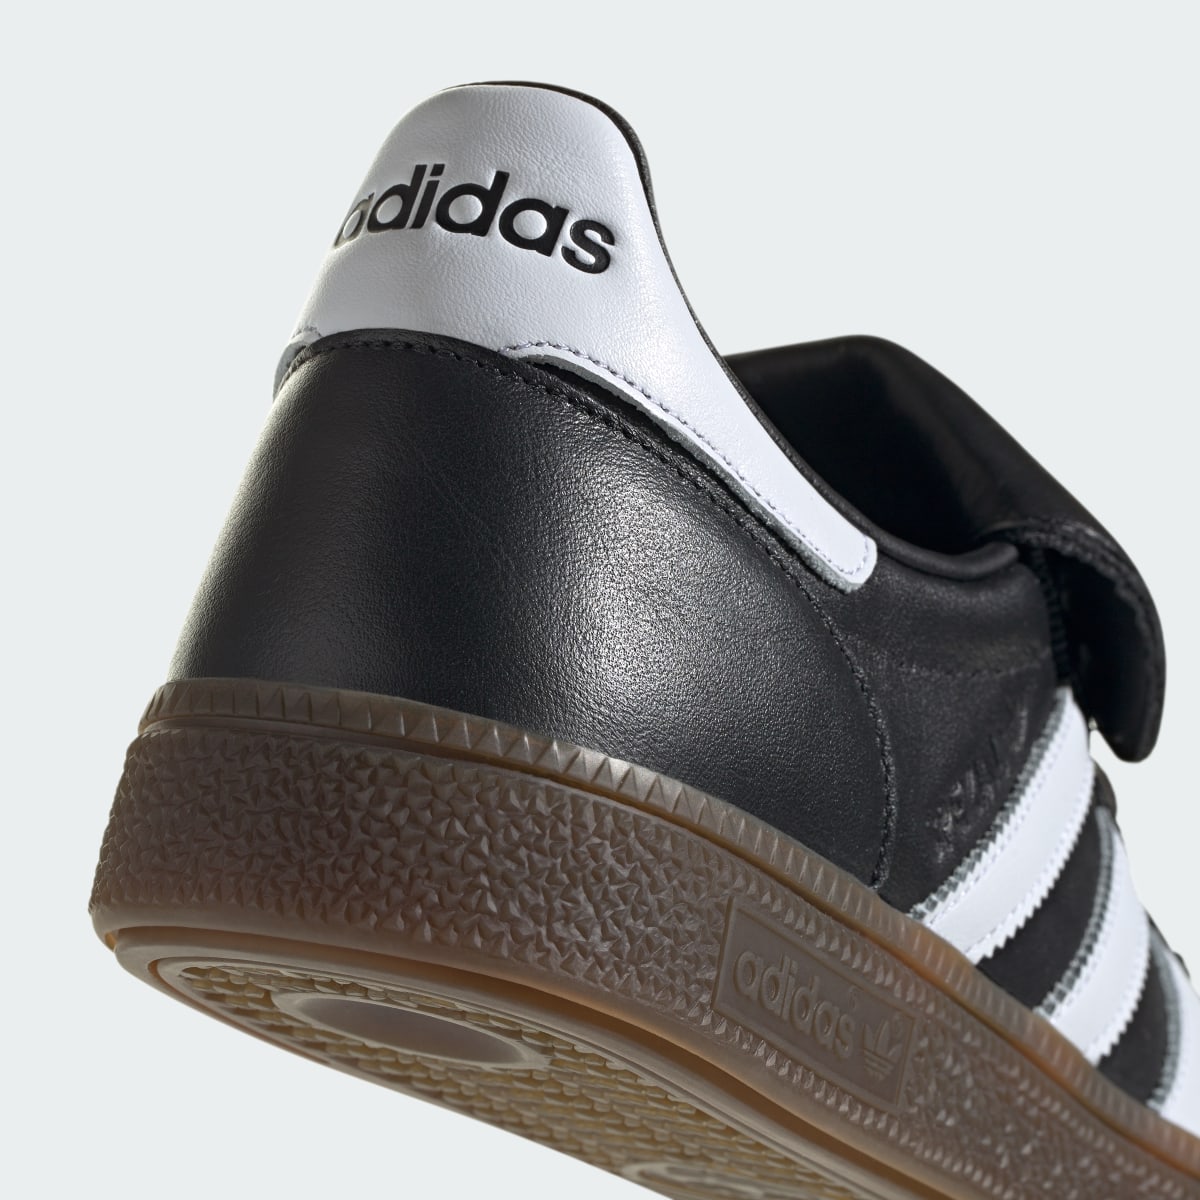 Adidas Handball Spezial Shoes. 9